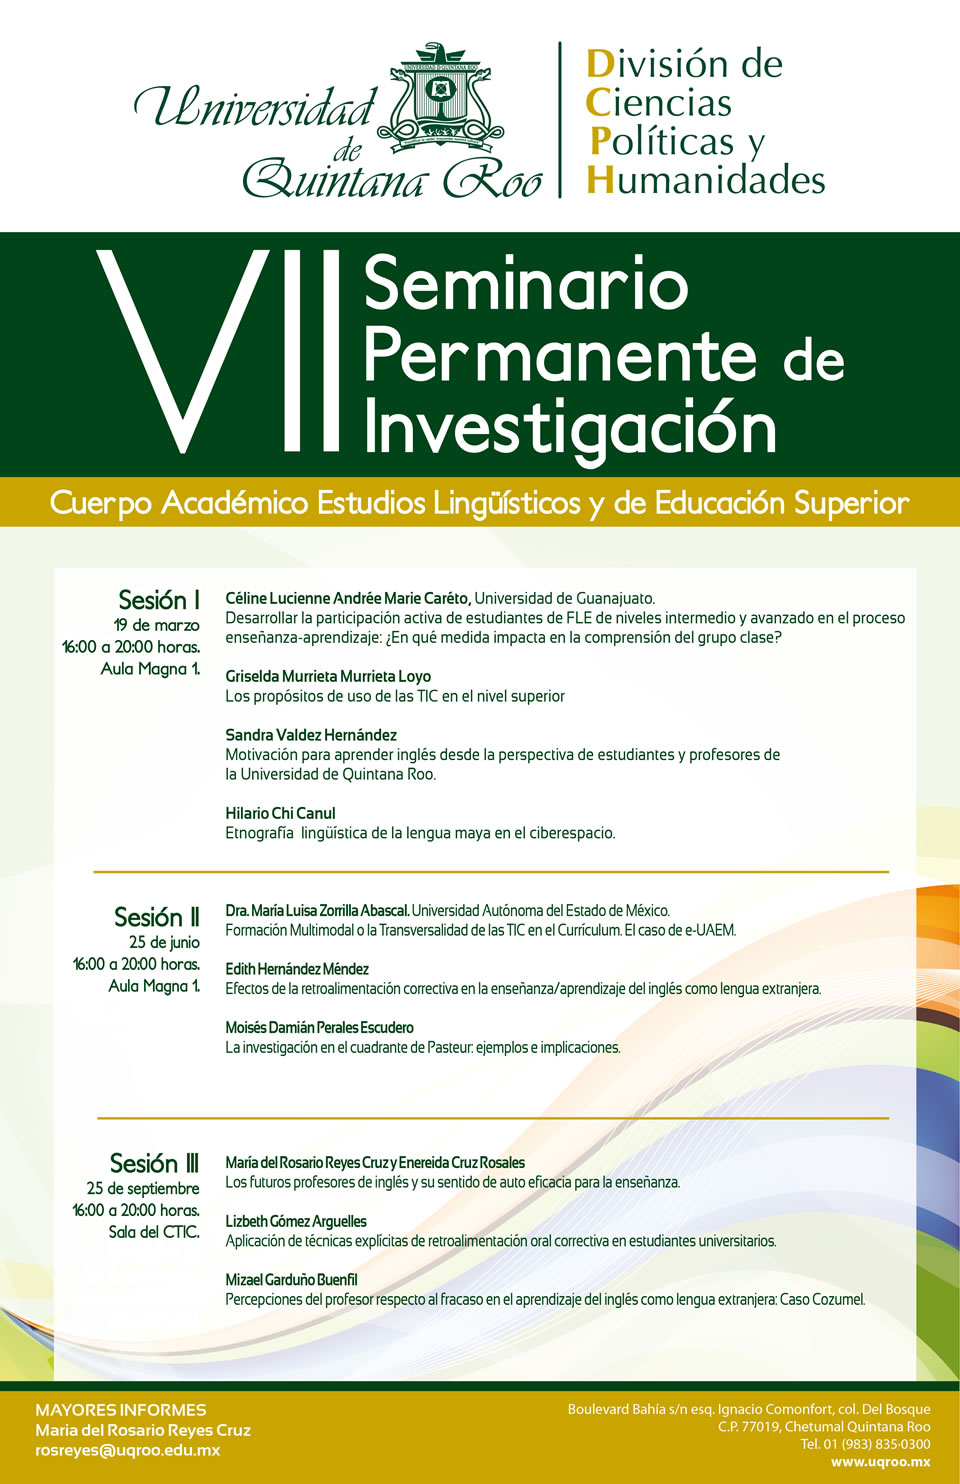 vii_seminario_permanente_investigacion.jpg